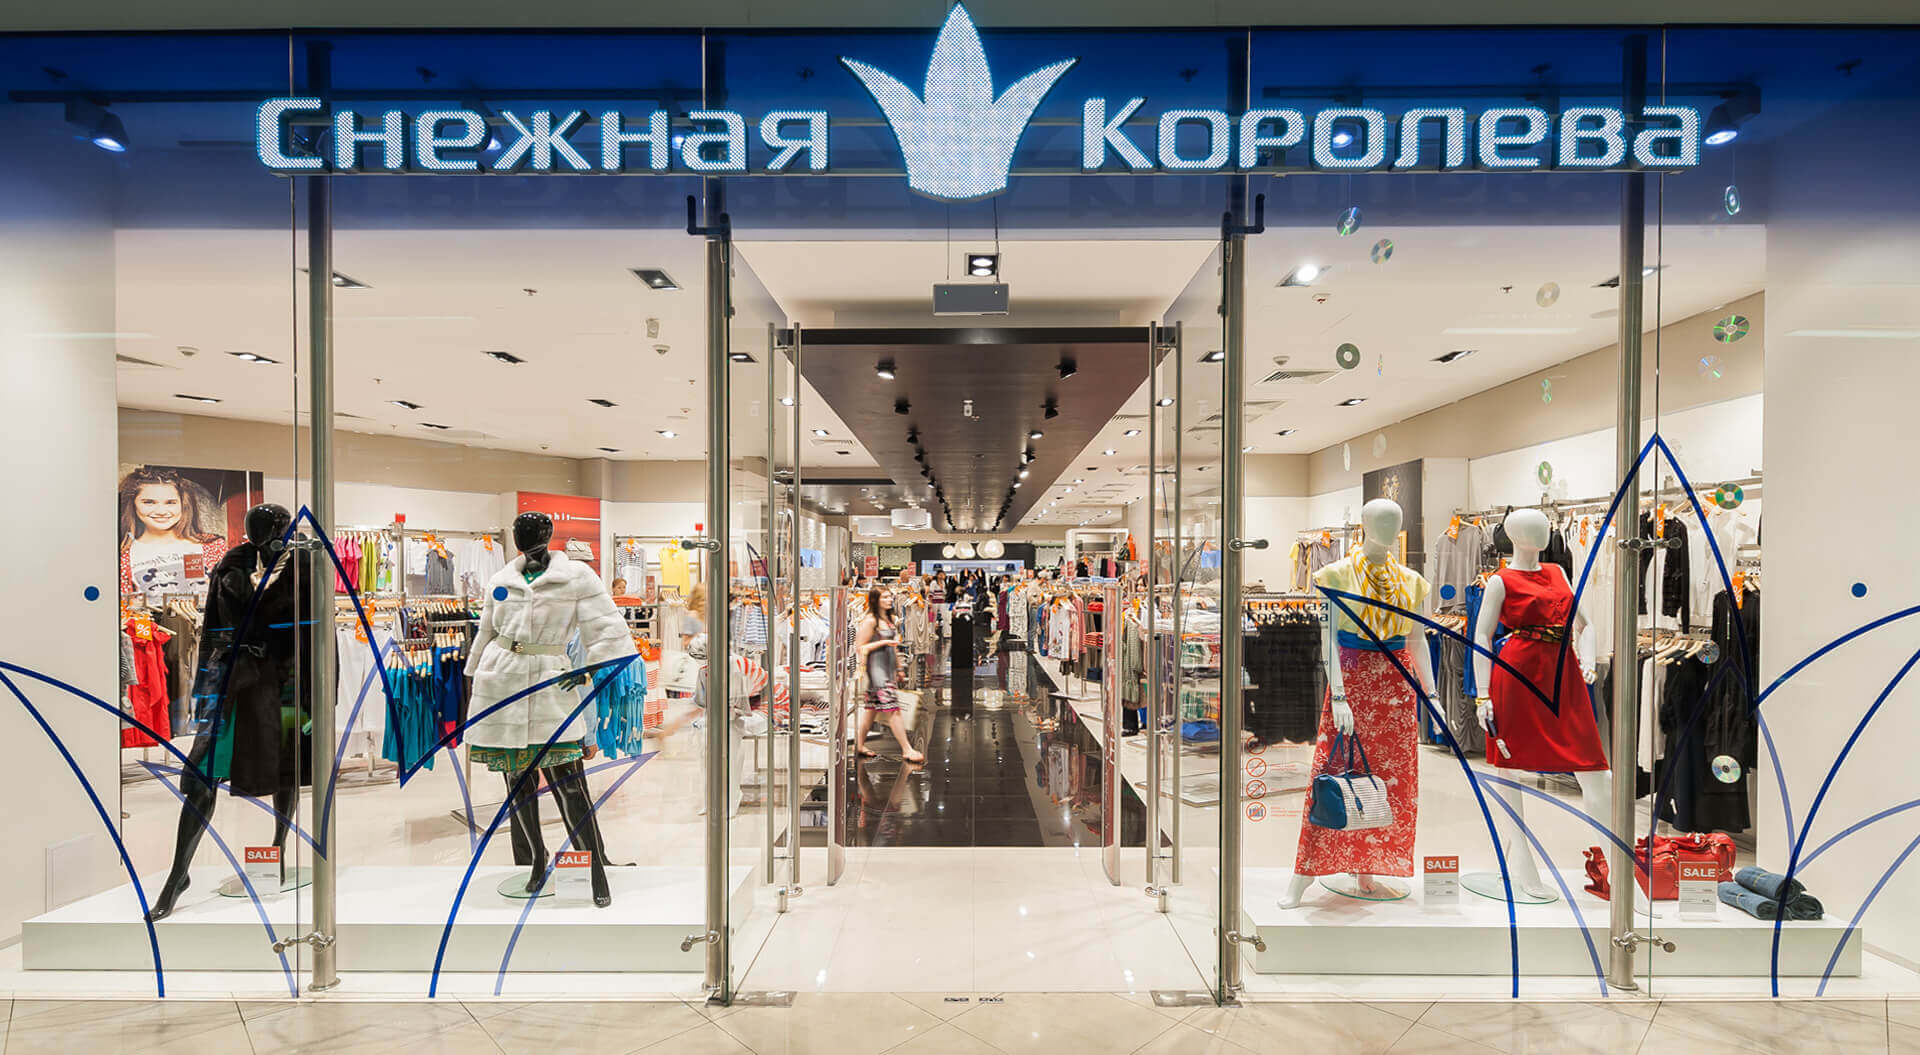 Snow Queen, Снежная королева, Russia fashion store shop front and retail interior design